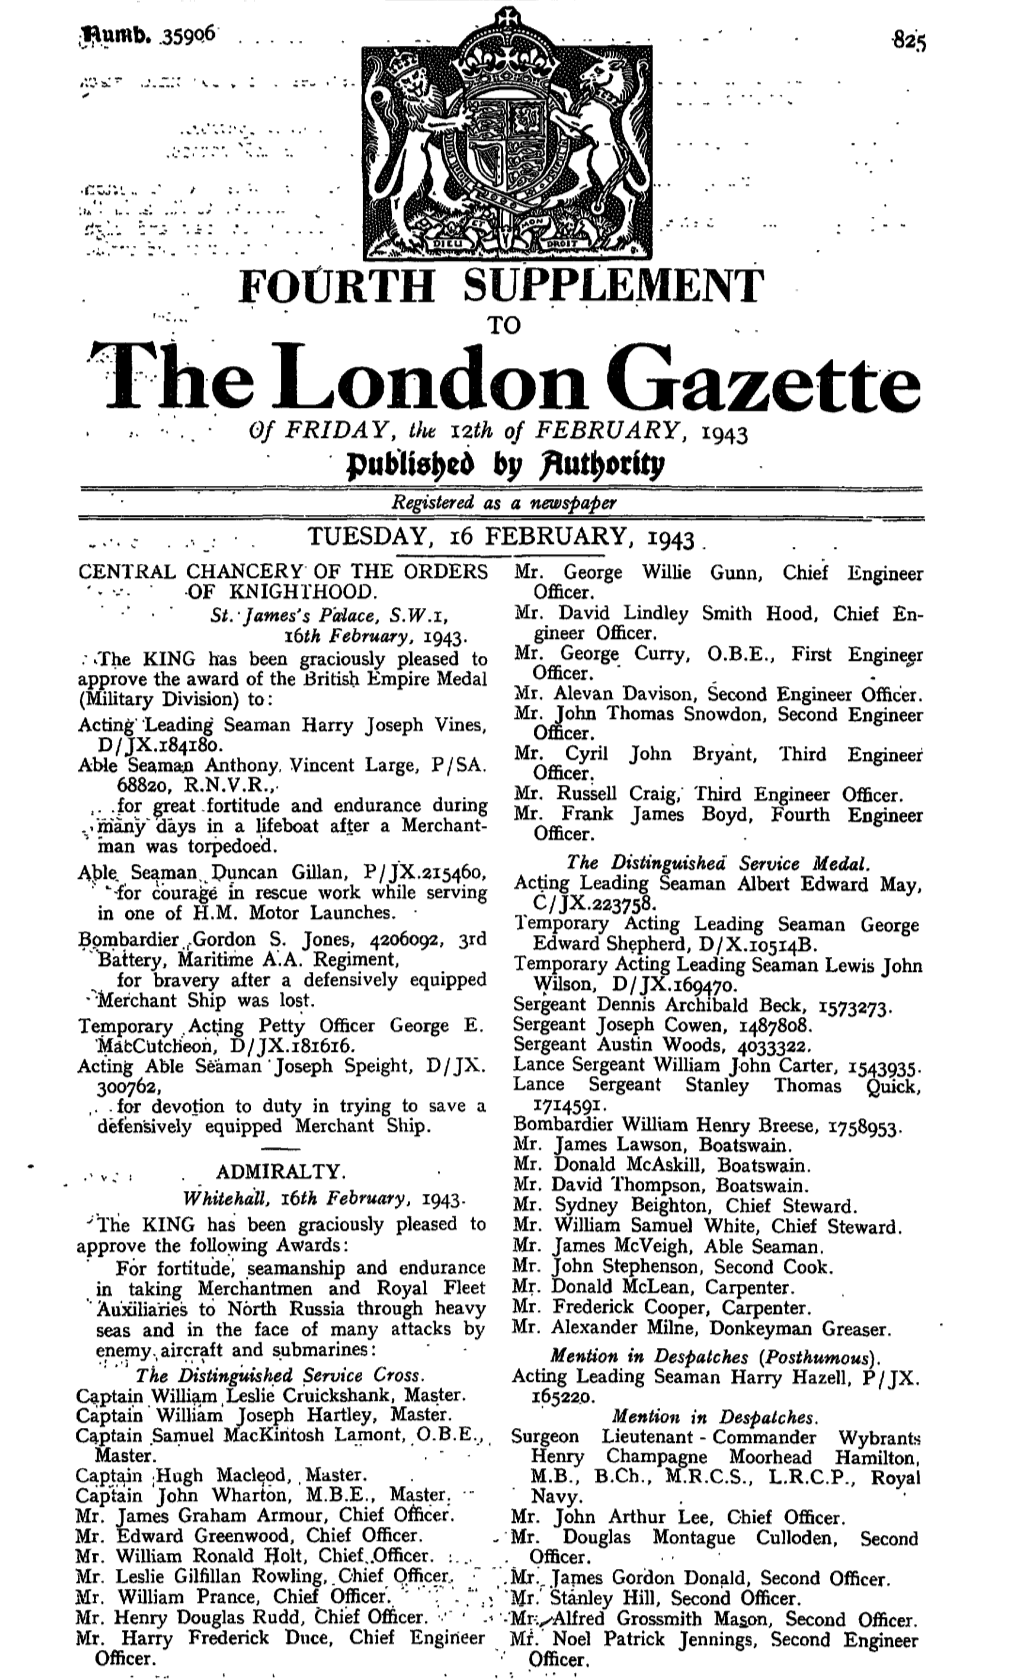 The London Gazette of FRIDAY